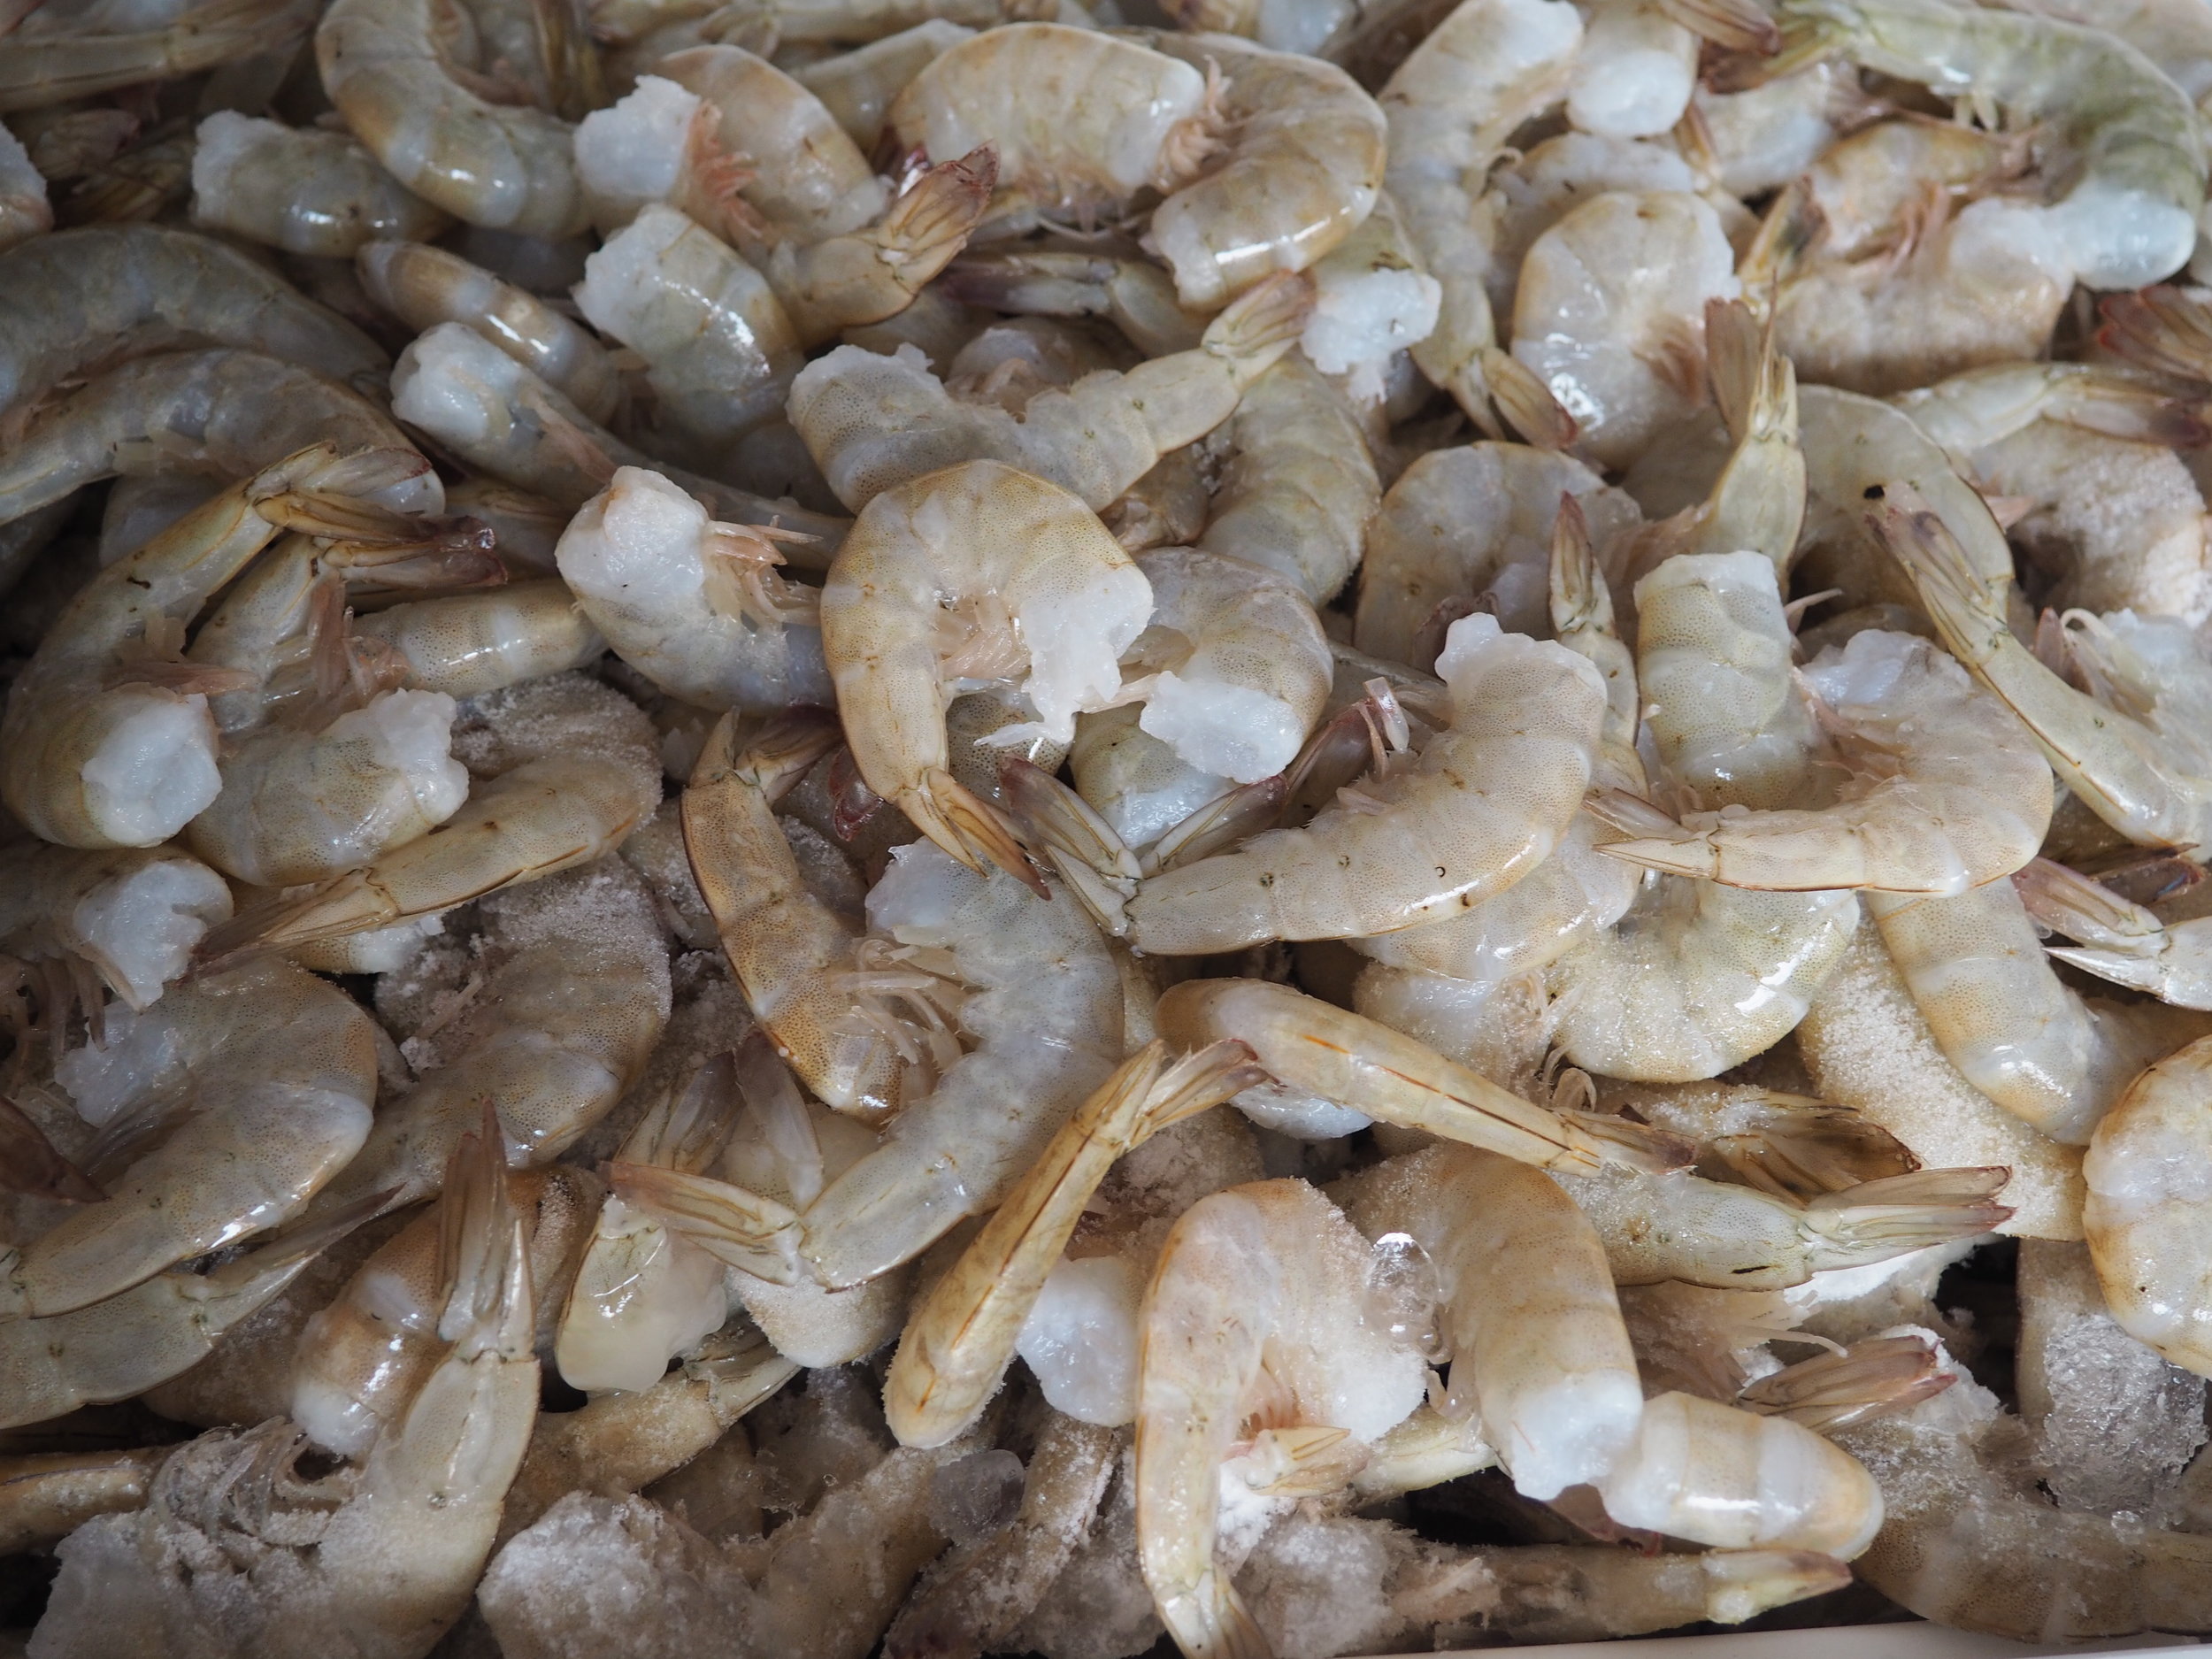 Puerto Vallarta fish market